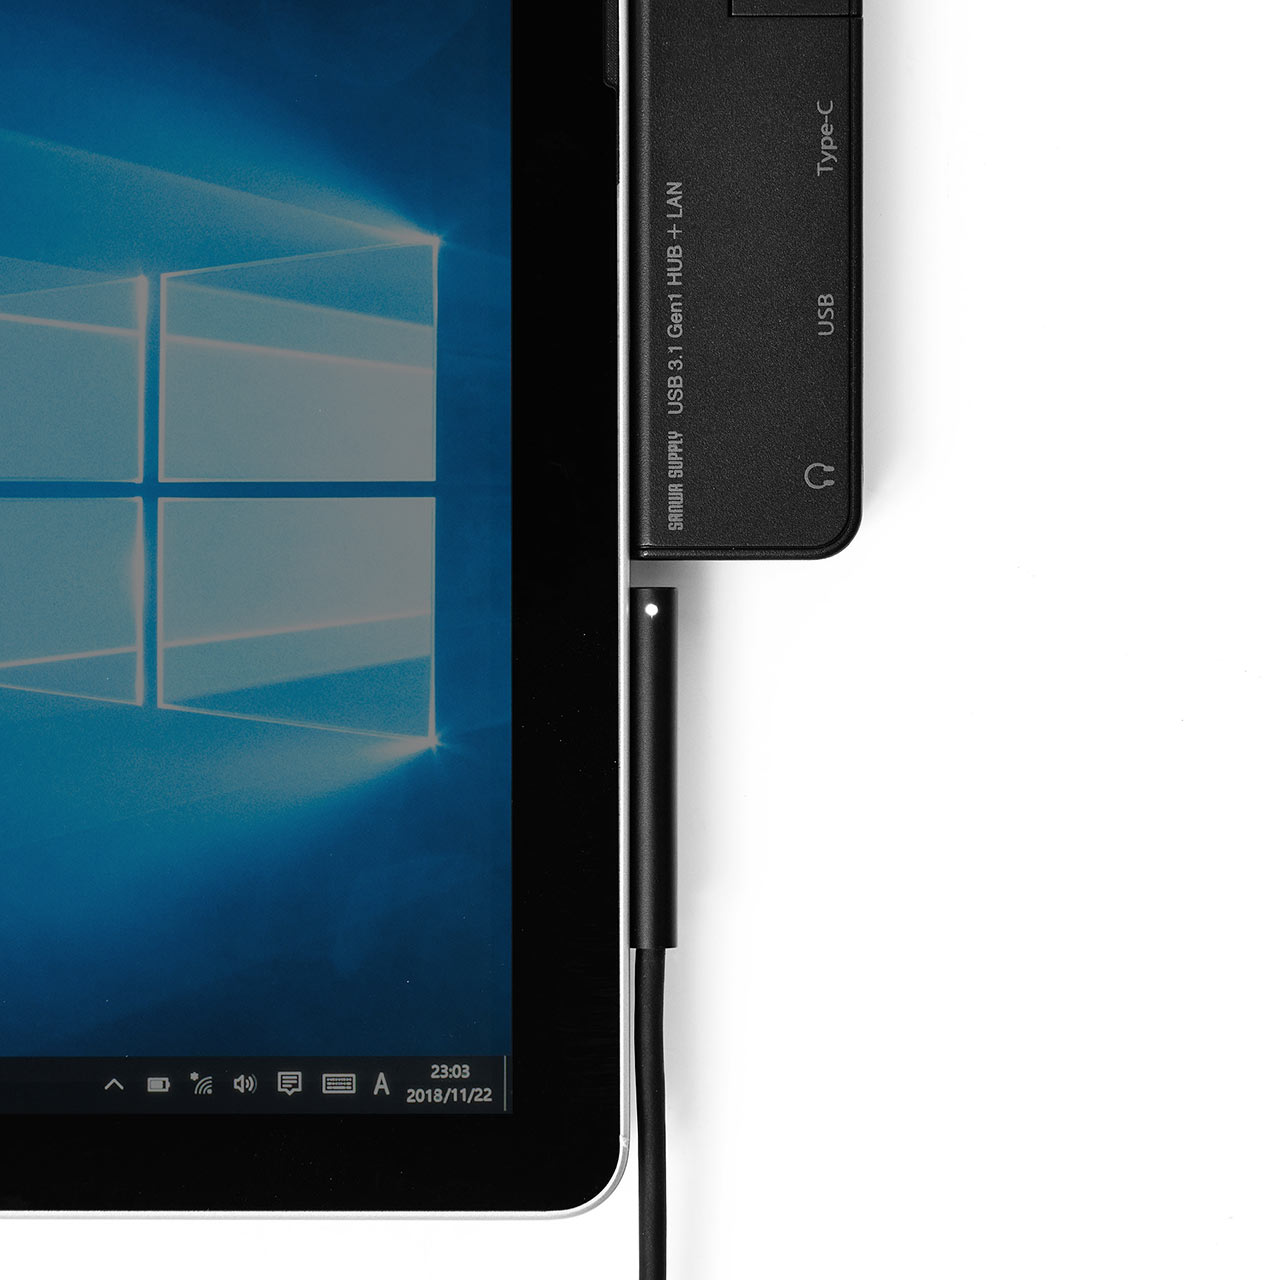 Surface Go/Go 2/Go 3p USB3.1/3.0nu USB Type-C USB A USB3.1 Gen1 LLAN|[g 3.5mm4Ƀ~jWbN oXp[ubN 400-HUB071BK